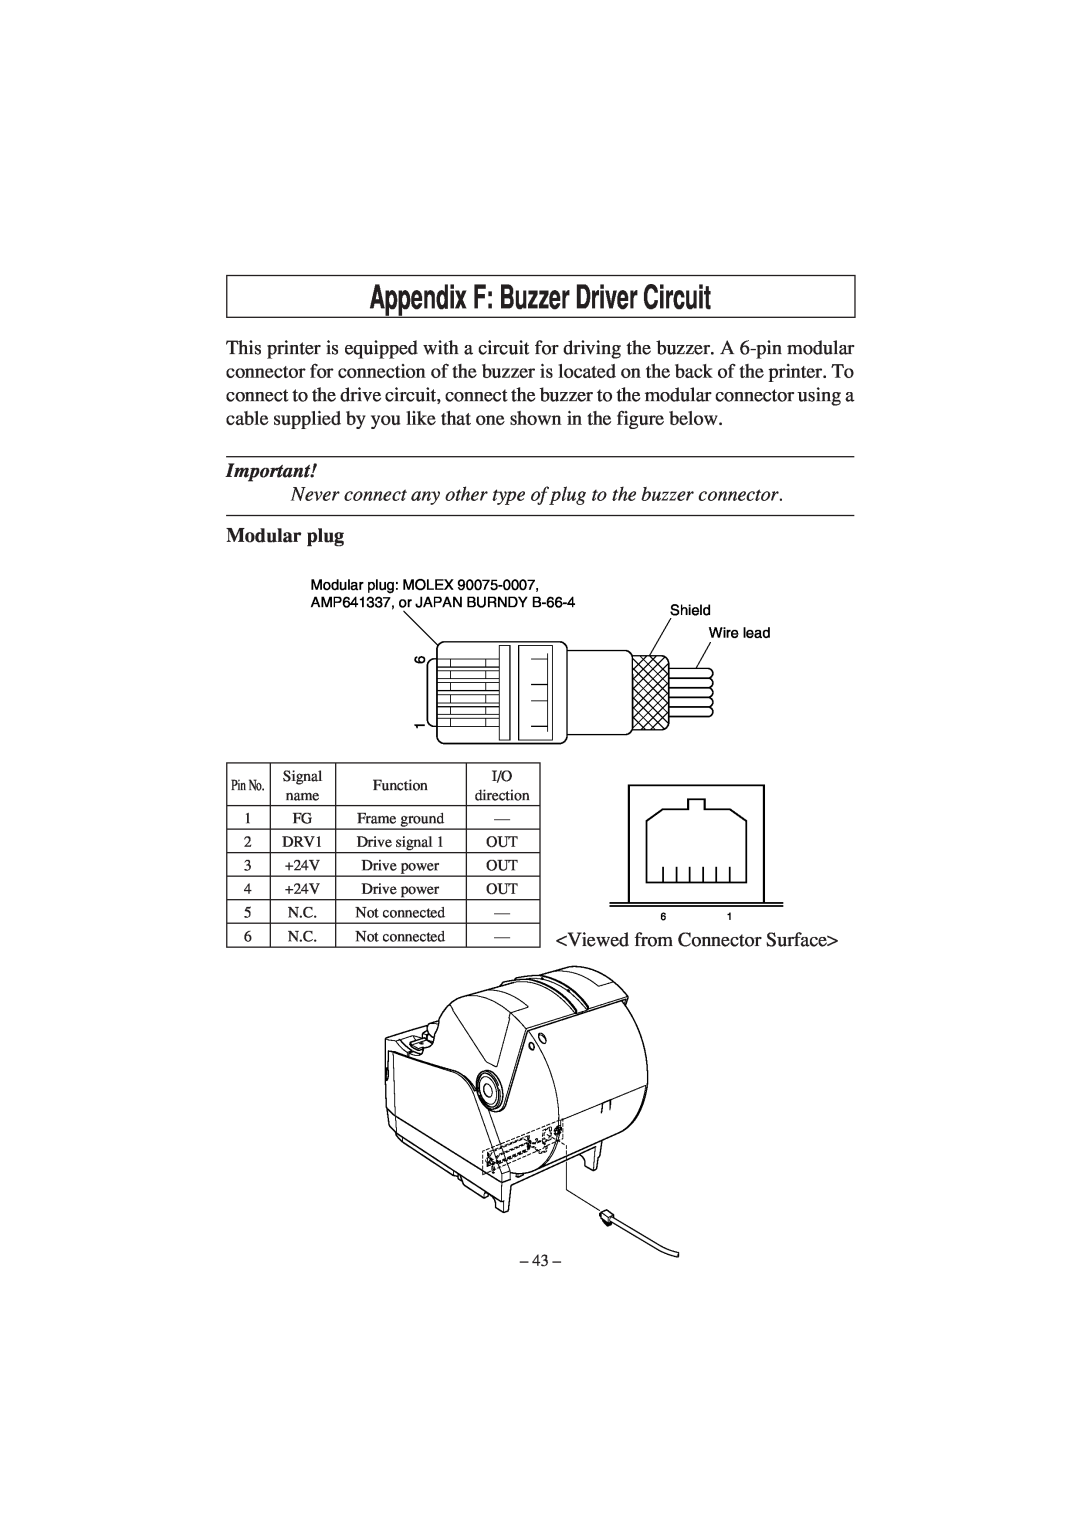 Star Micronics TSP1000 user manual Appendix F Buzzer Driver Circuit, Modular plug 